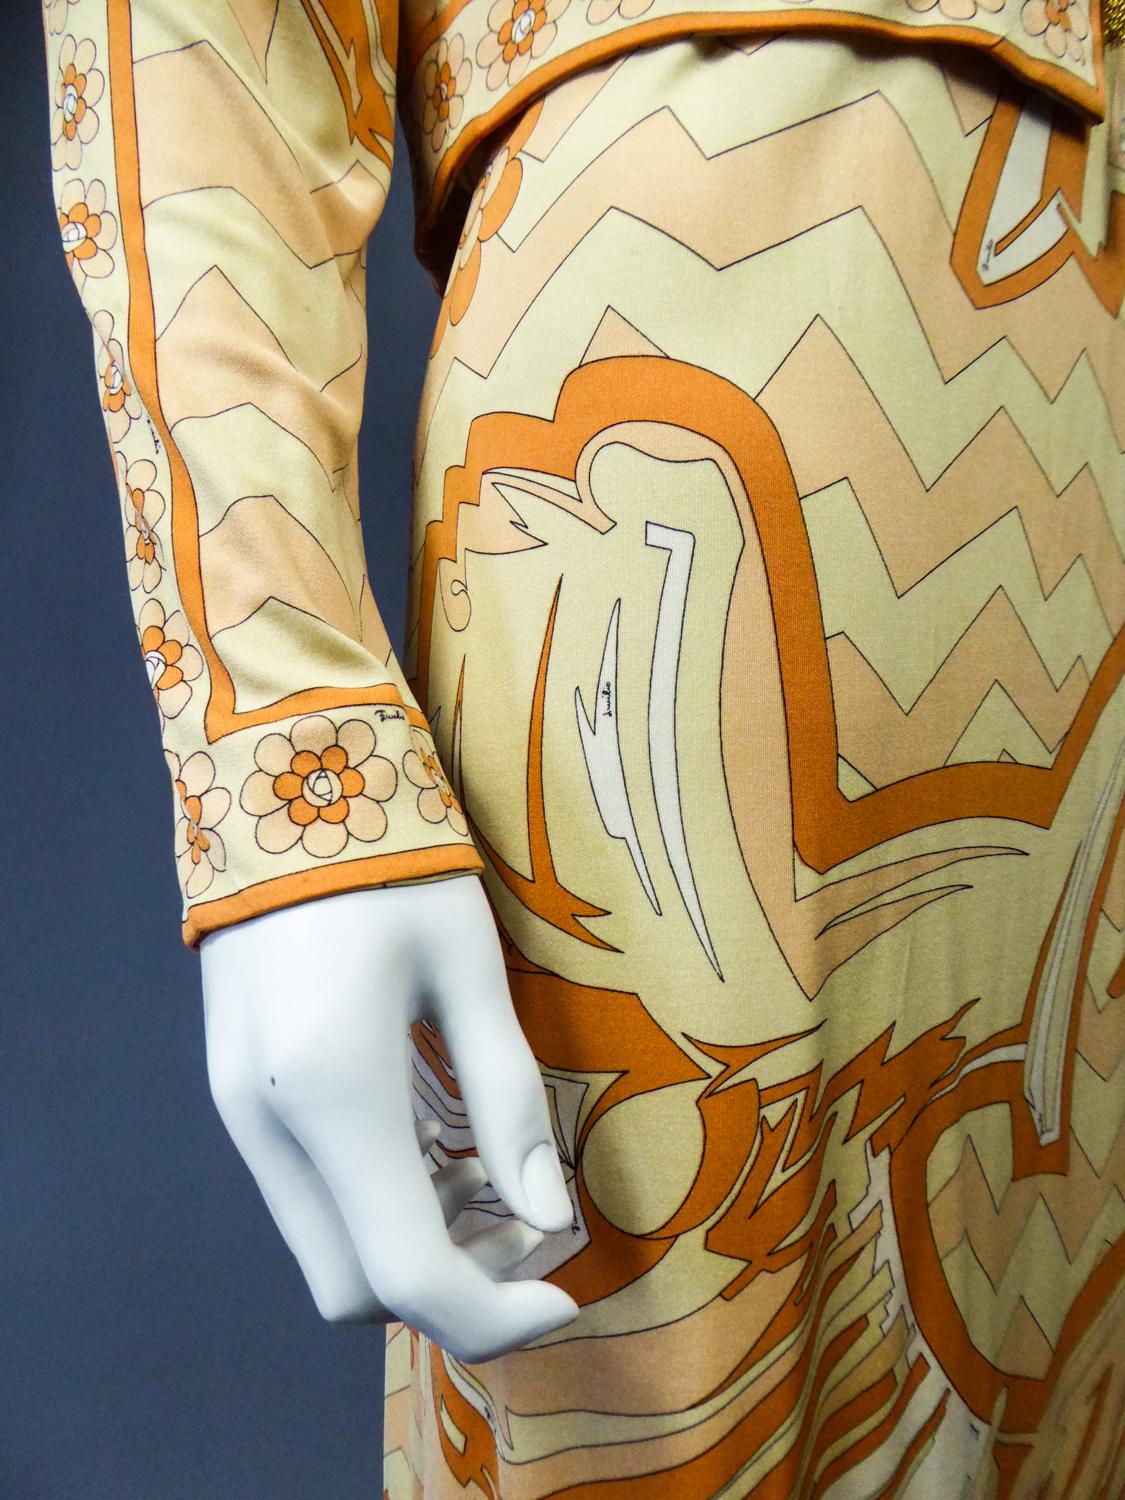 Emilio Pucci - Ensemble robe et gilet en jersey imprimé, circa 1960/1970 en vente 6